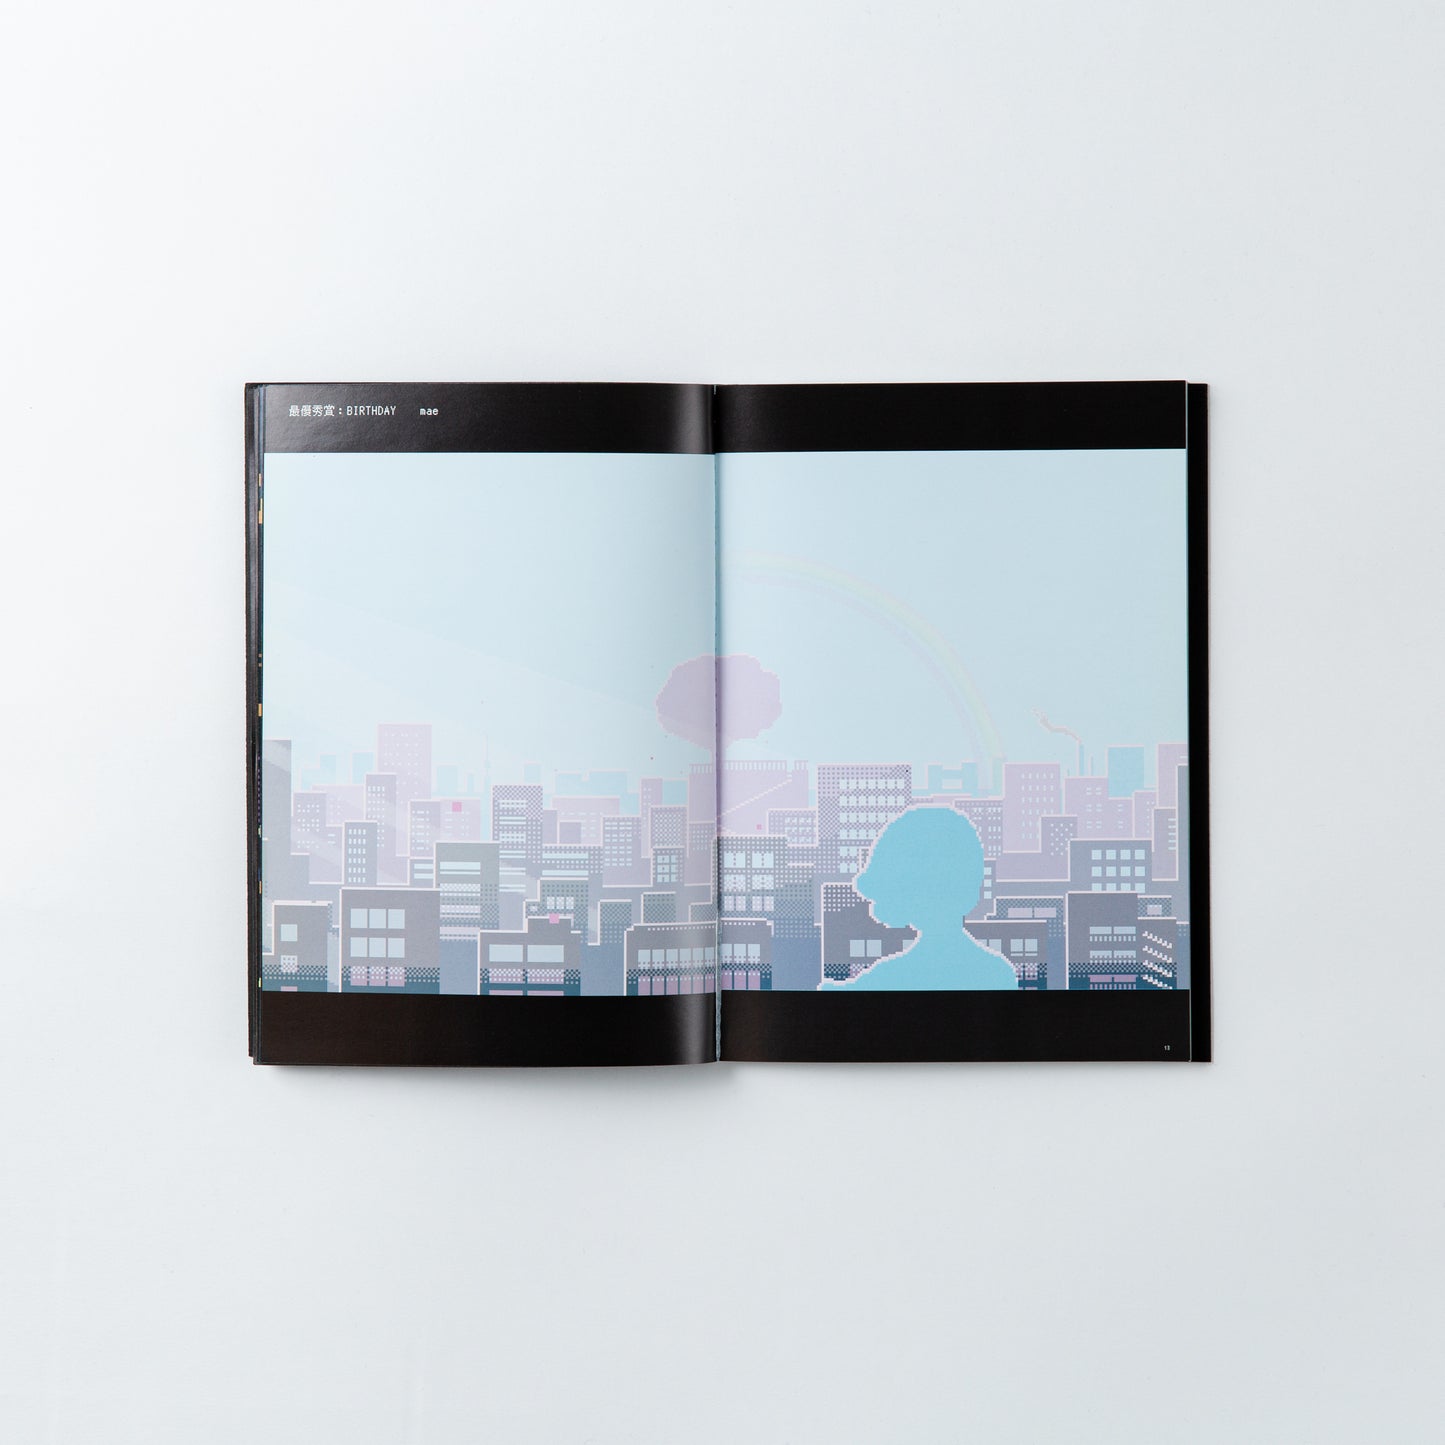 Shibuya Pixel Art Collection Book 2020